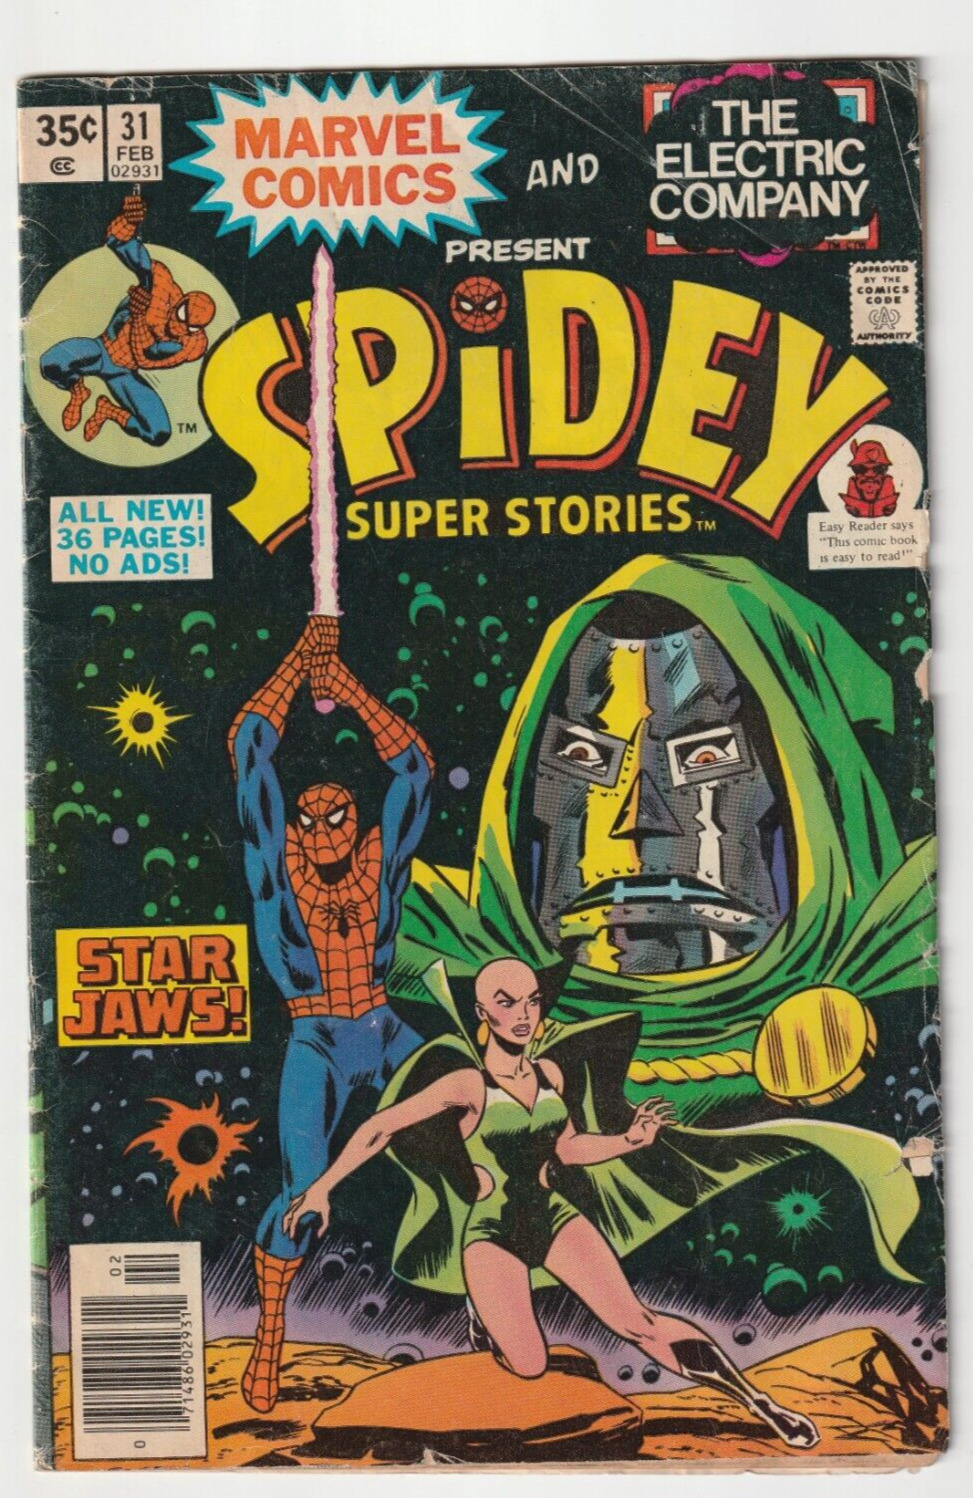 Spidey Super Stories #31 (Marvel Comics 1978) VG- Spider-Man Dr. Doom Star Wars